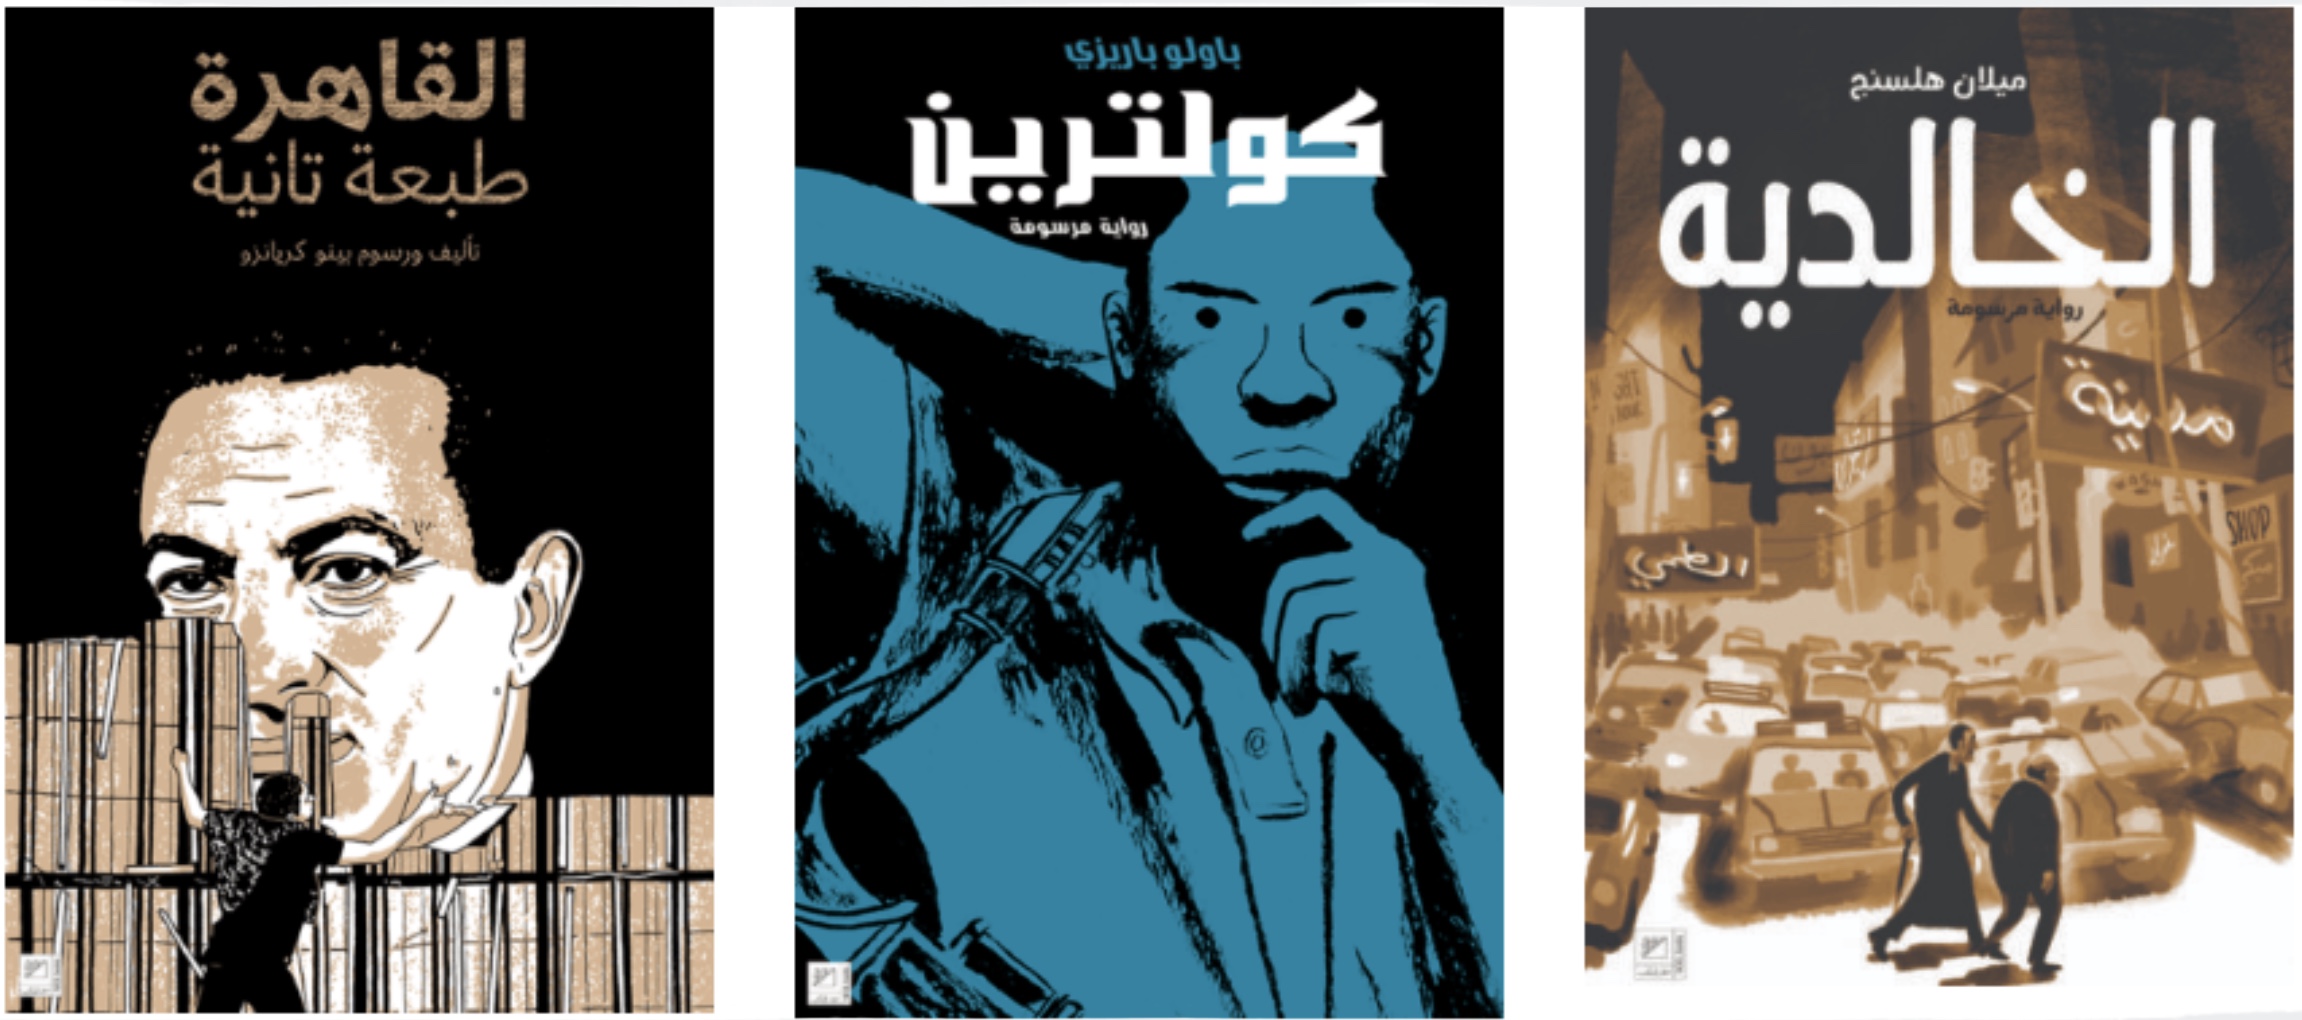 Cairo, Coltrane and a fictional village